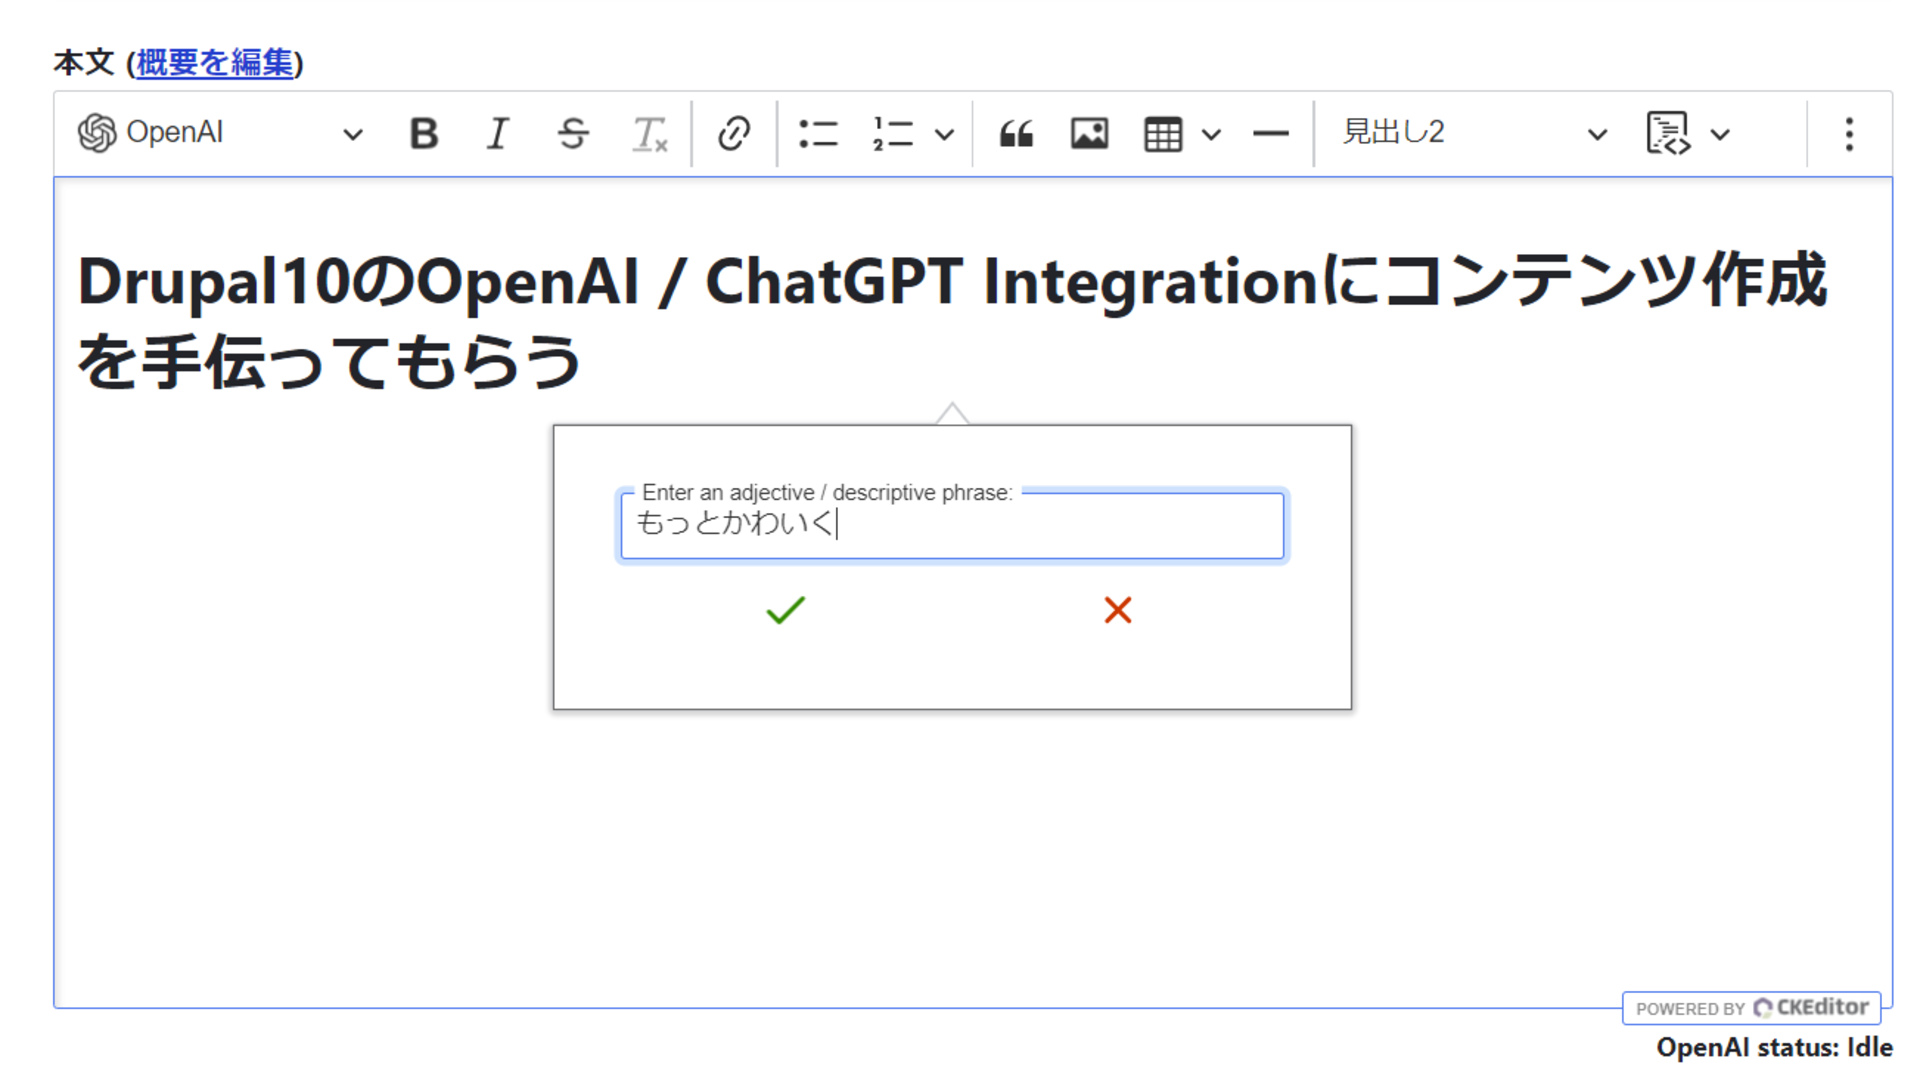 Drupal10のOpenAI / ChatGPT Integrationにコンテンツ作成を手伝ってもらう